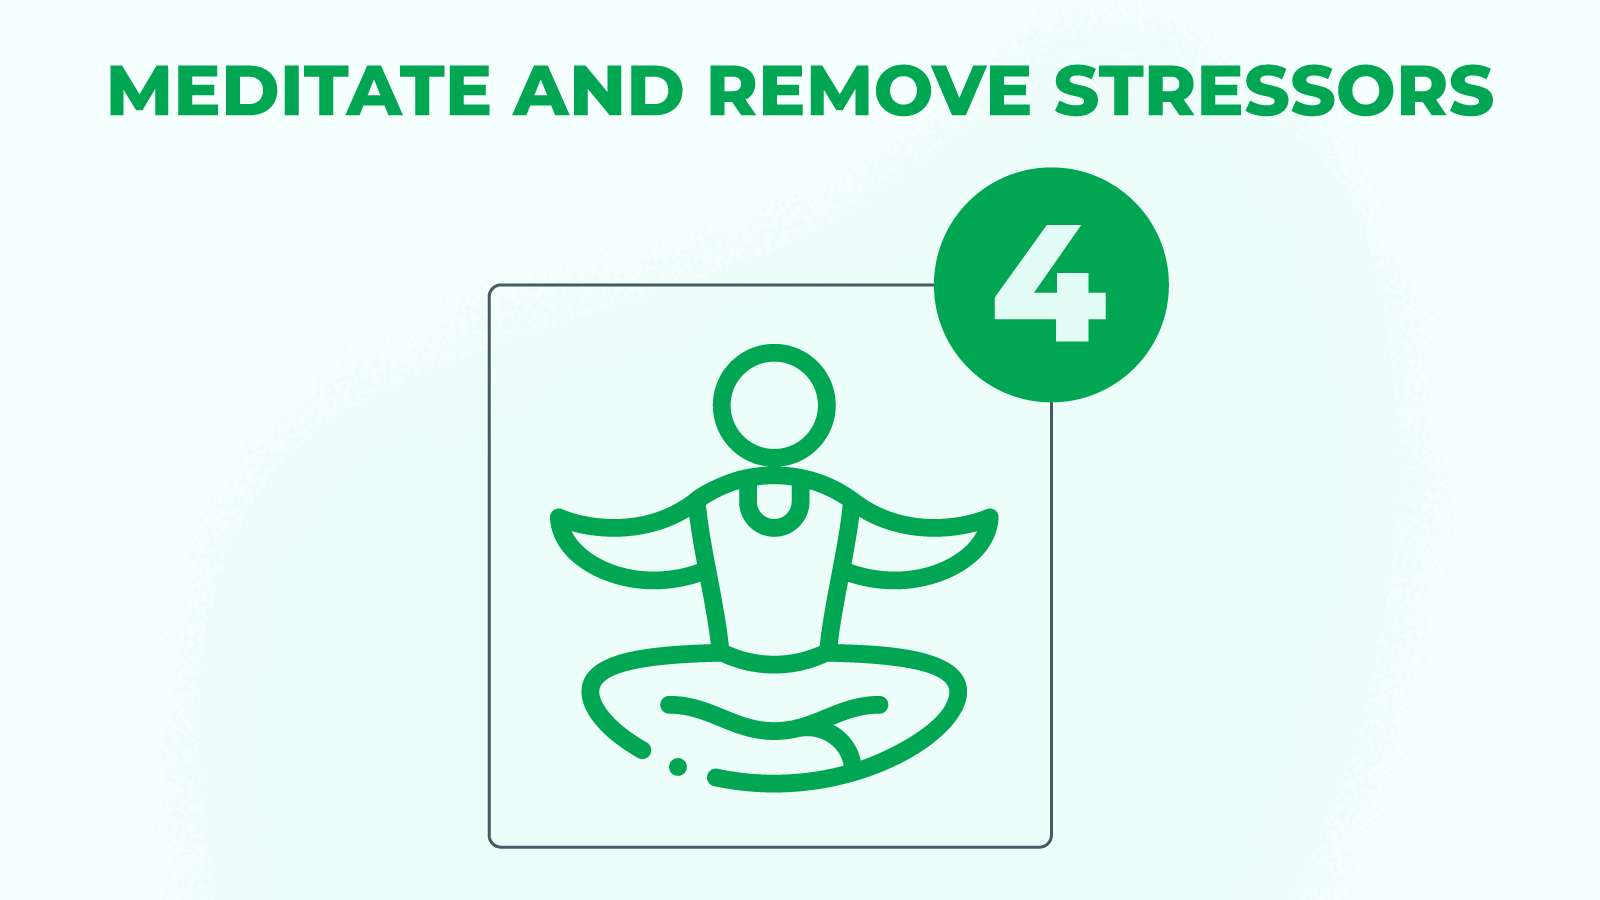 Meditate and remove stressors